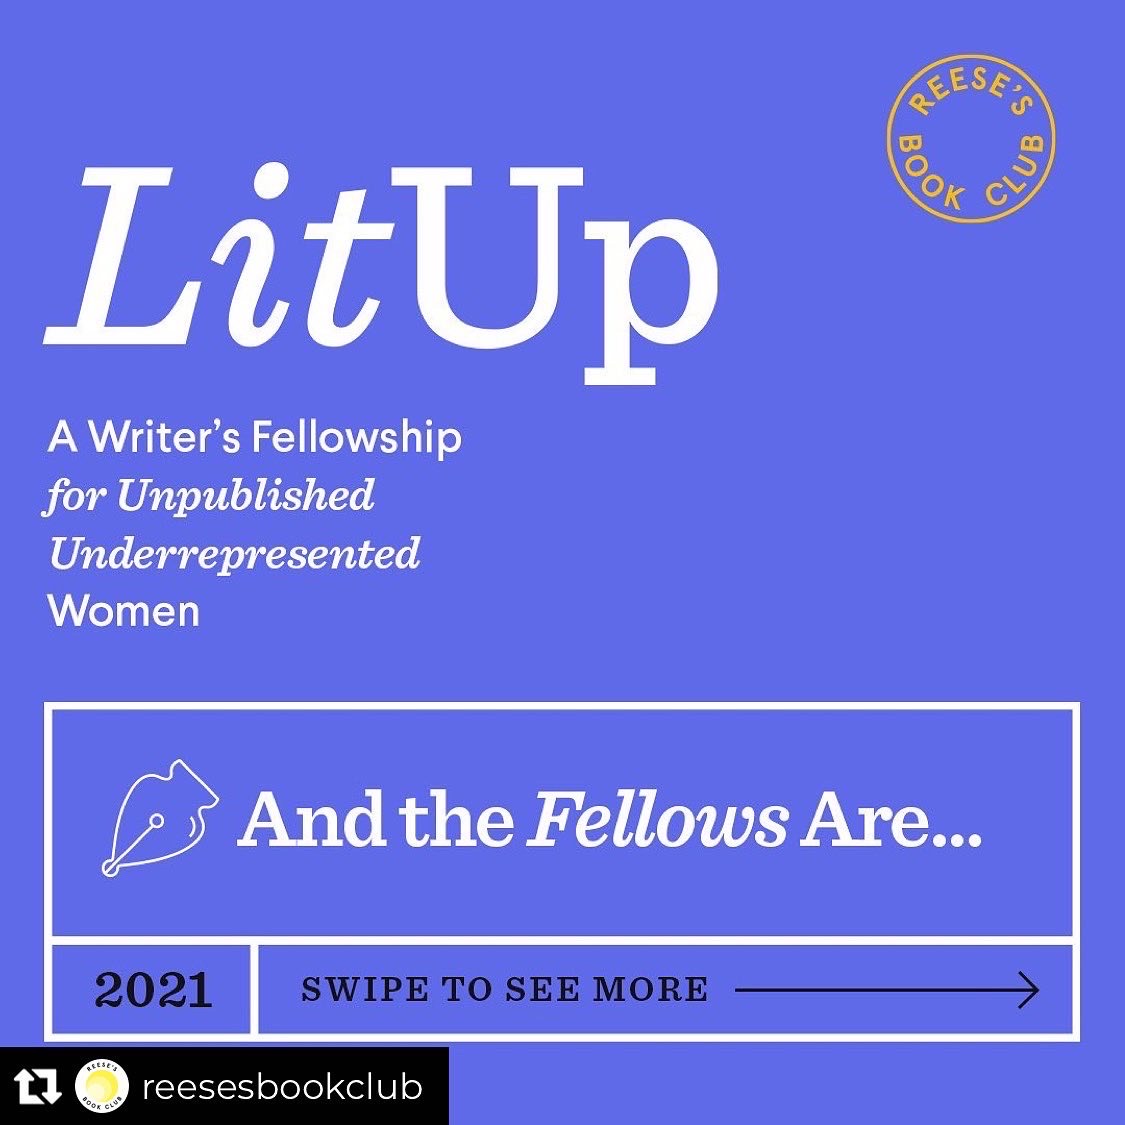 LitUp announcement by Reese's Book Club